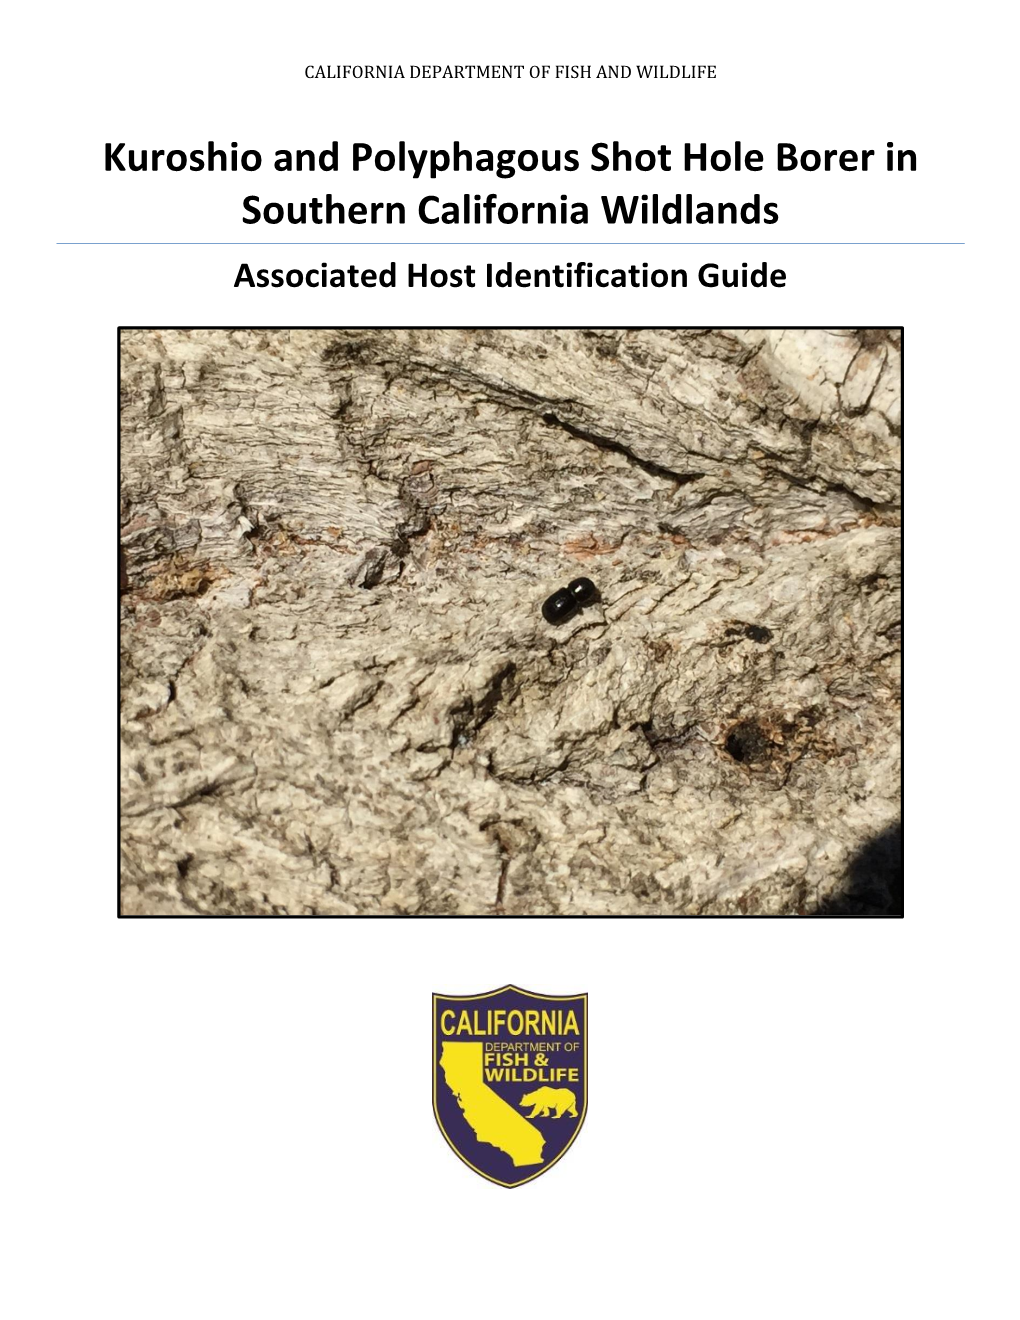 Kuroshio and Polyphagous Shot Hole Borer in Southern California Wildlands Associated Host Identification Guide